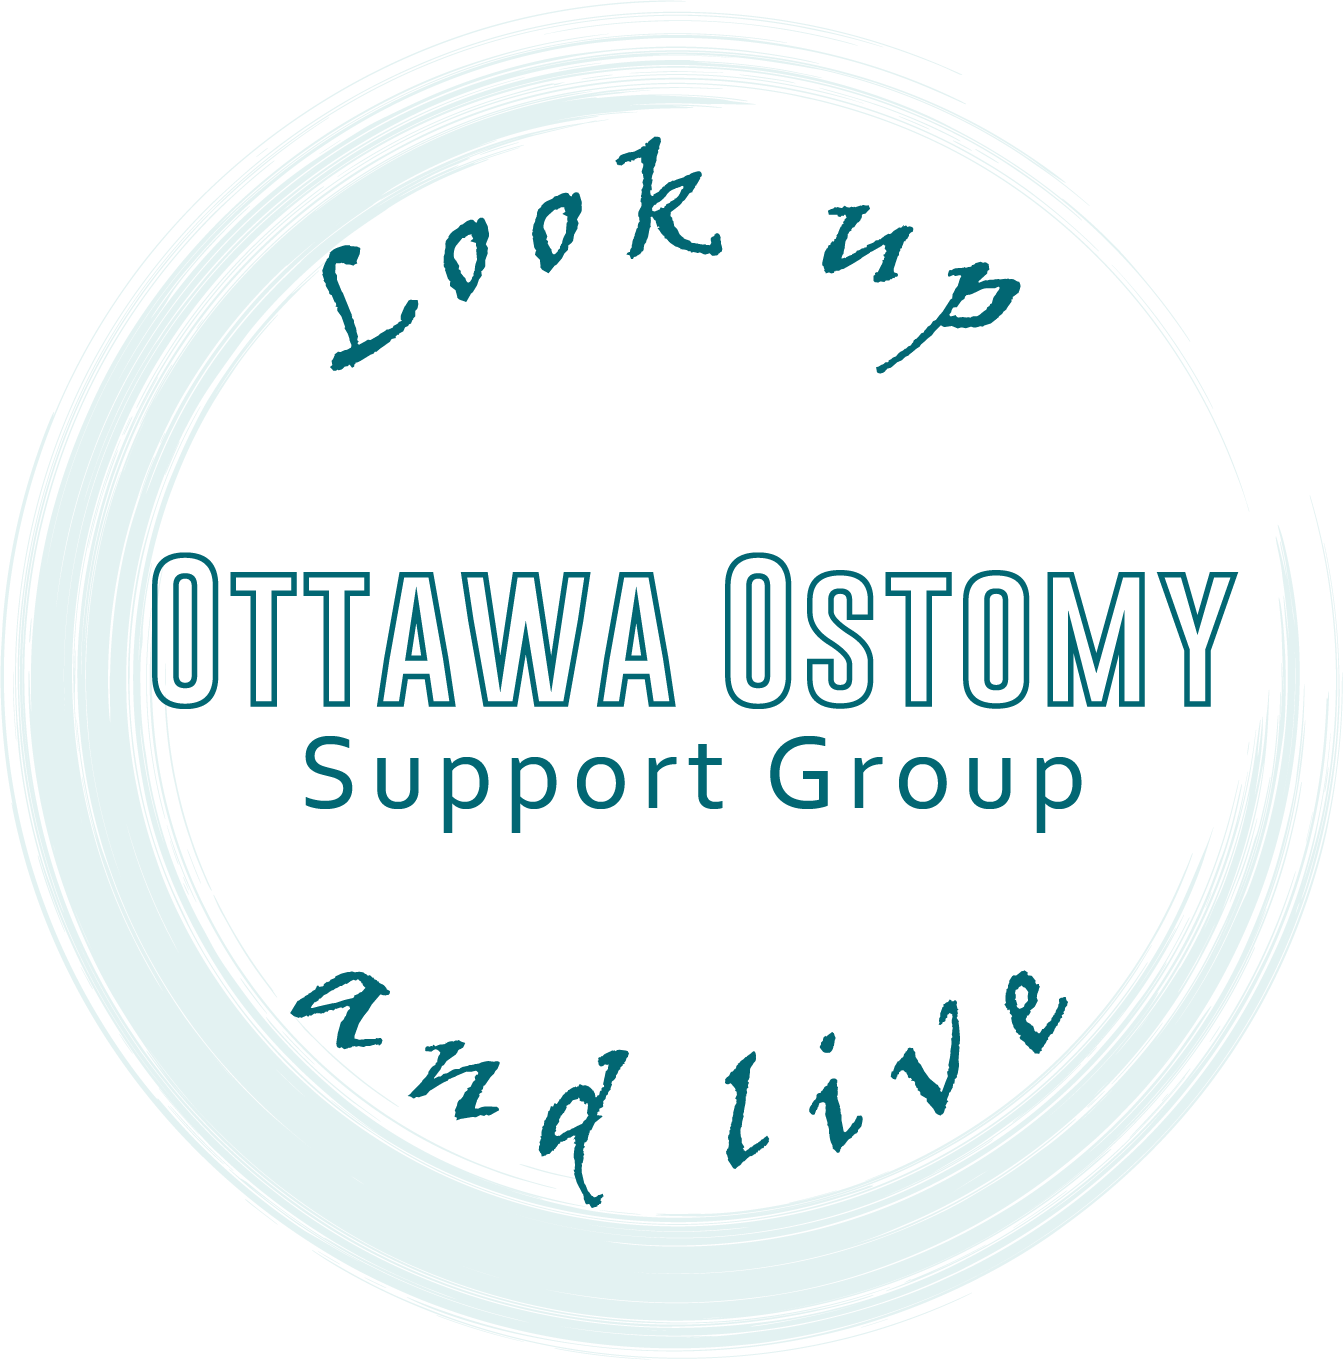 Ottawa Ostomy Support Group